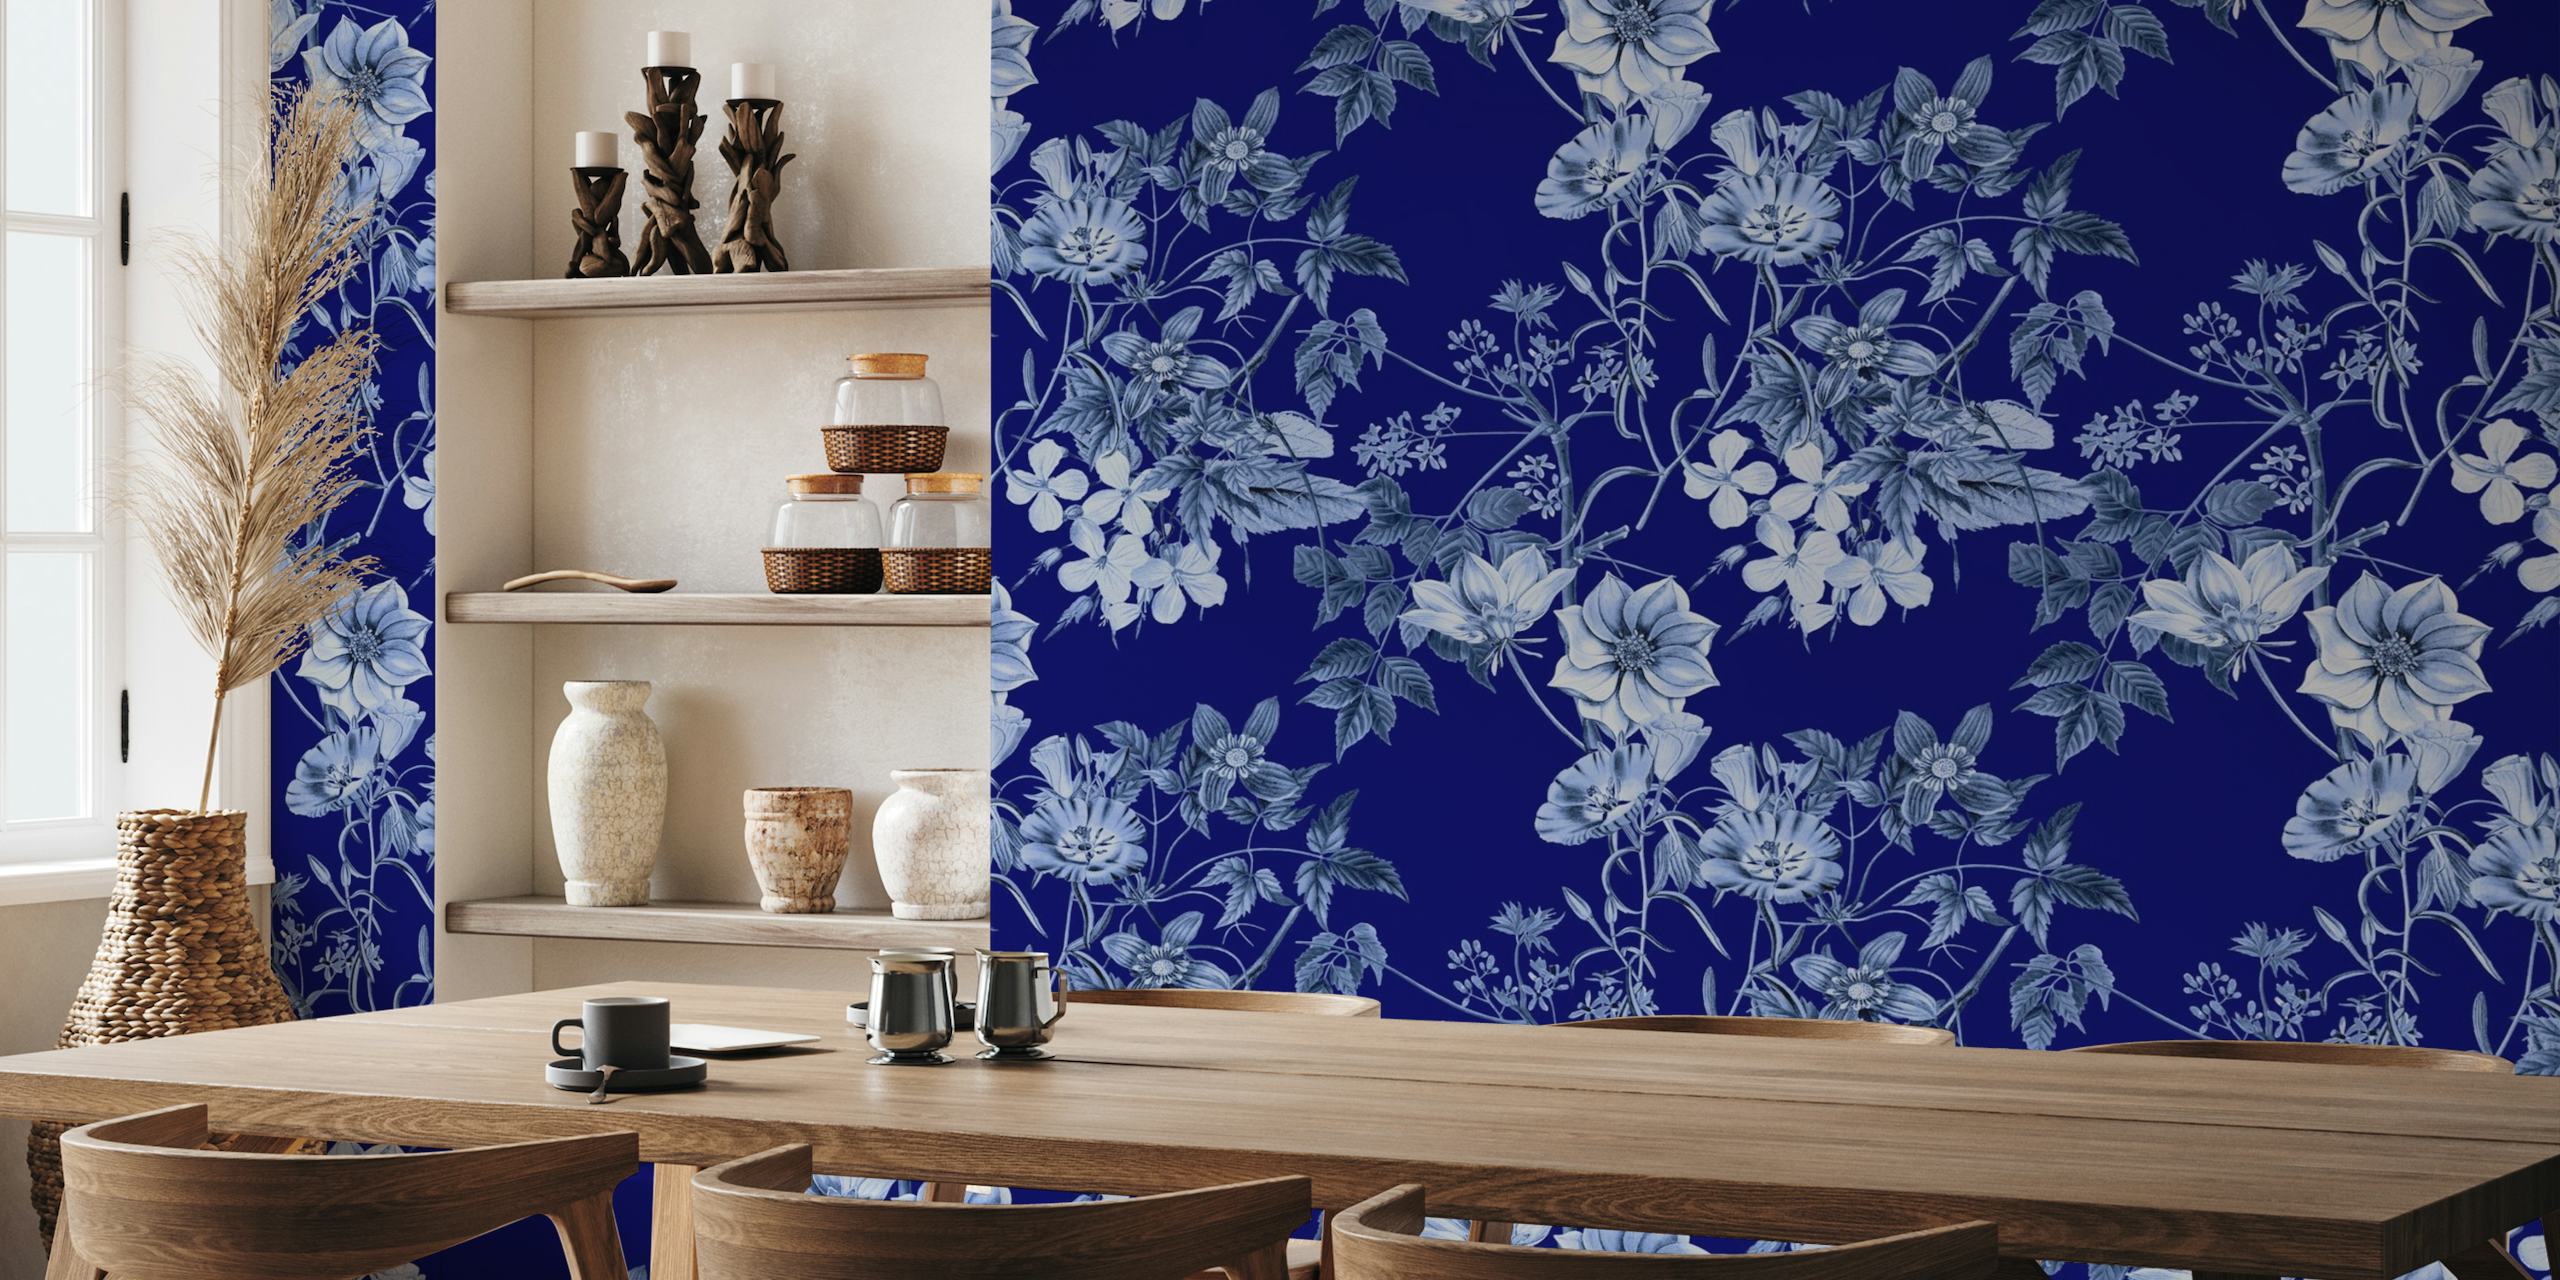 Tiefblaue florale Wandtapete mit aufwendigem Blumenmuster